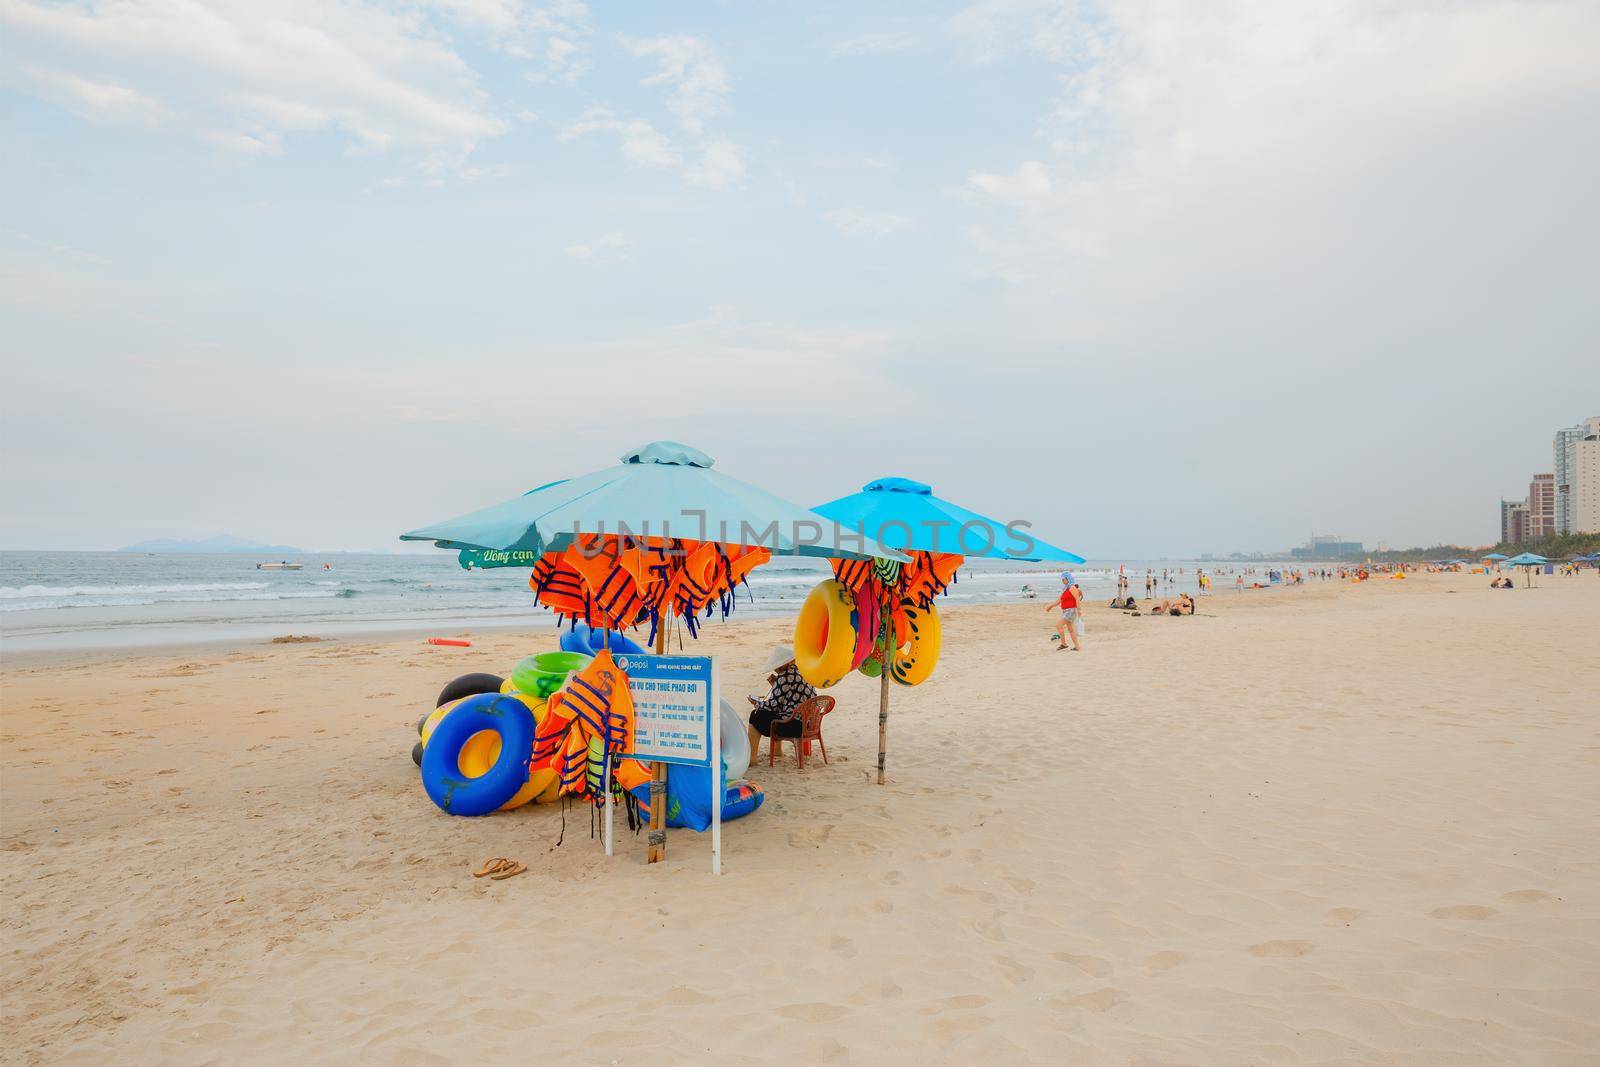 Danang, Vietnam: 9 May 2019 - Beaches in Danang, Vietnam. Tourists play with fun.